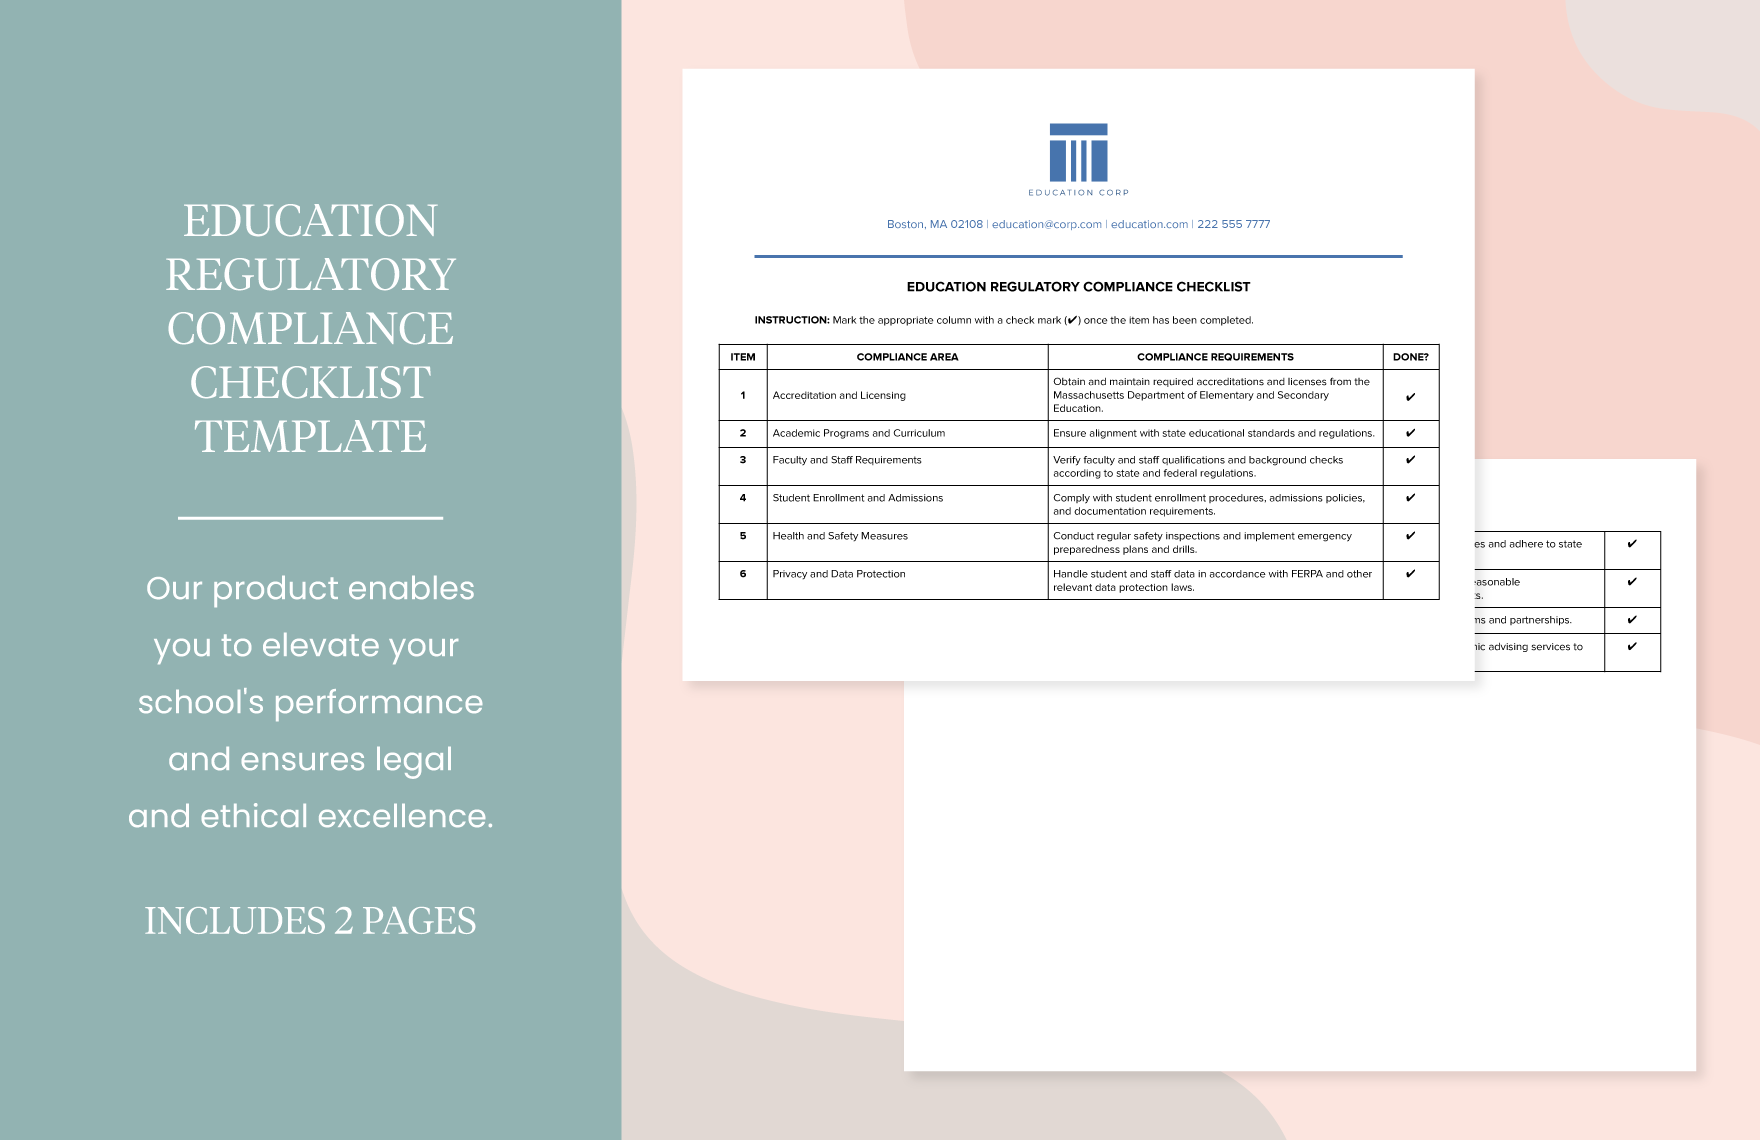 Education Regulatory Compliance Checklist Template in Word, Google Docs, PDF